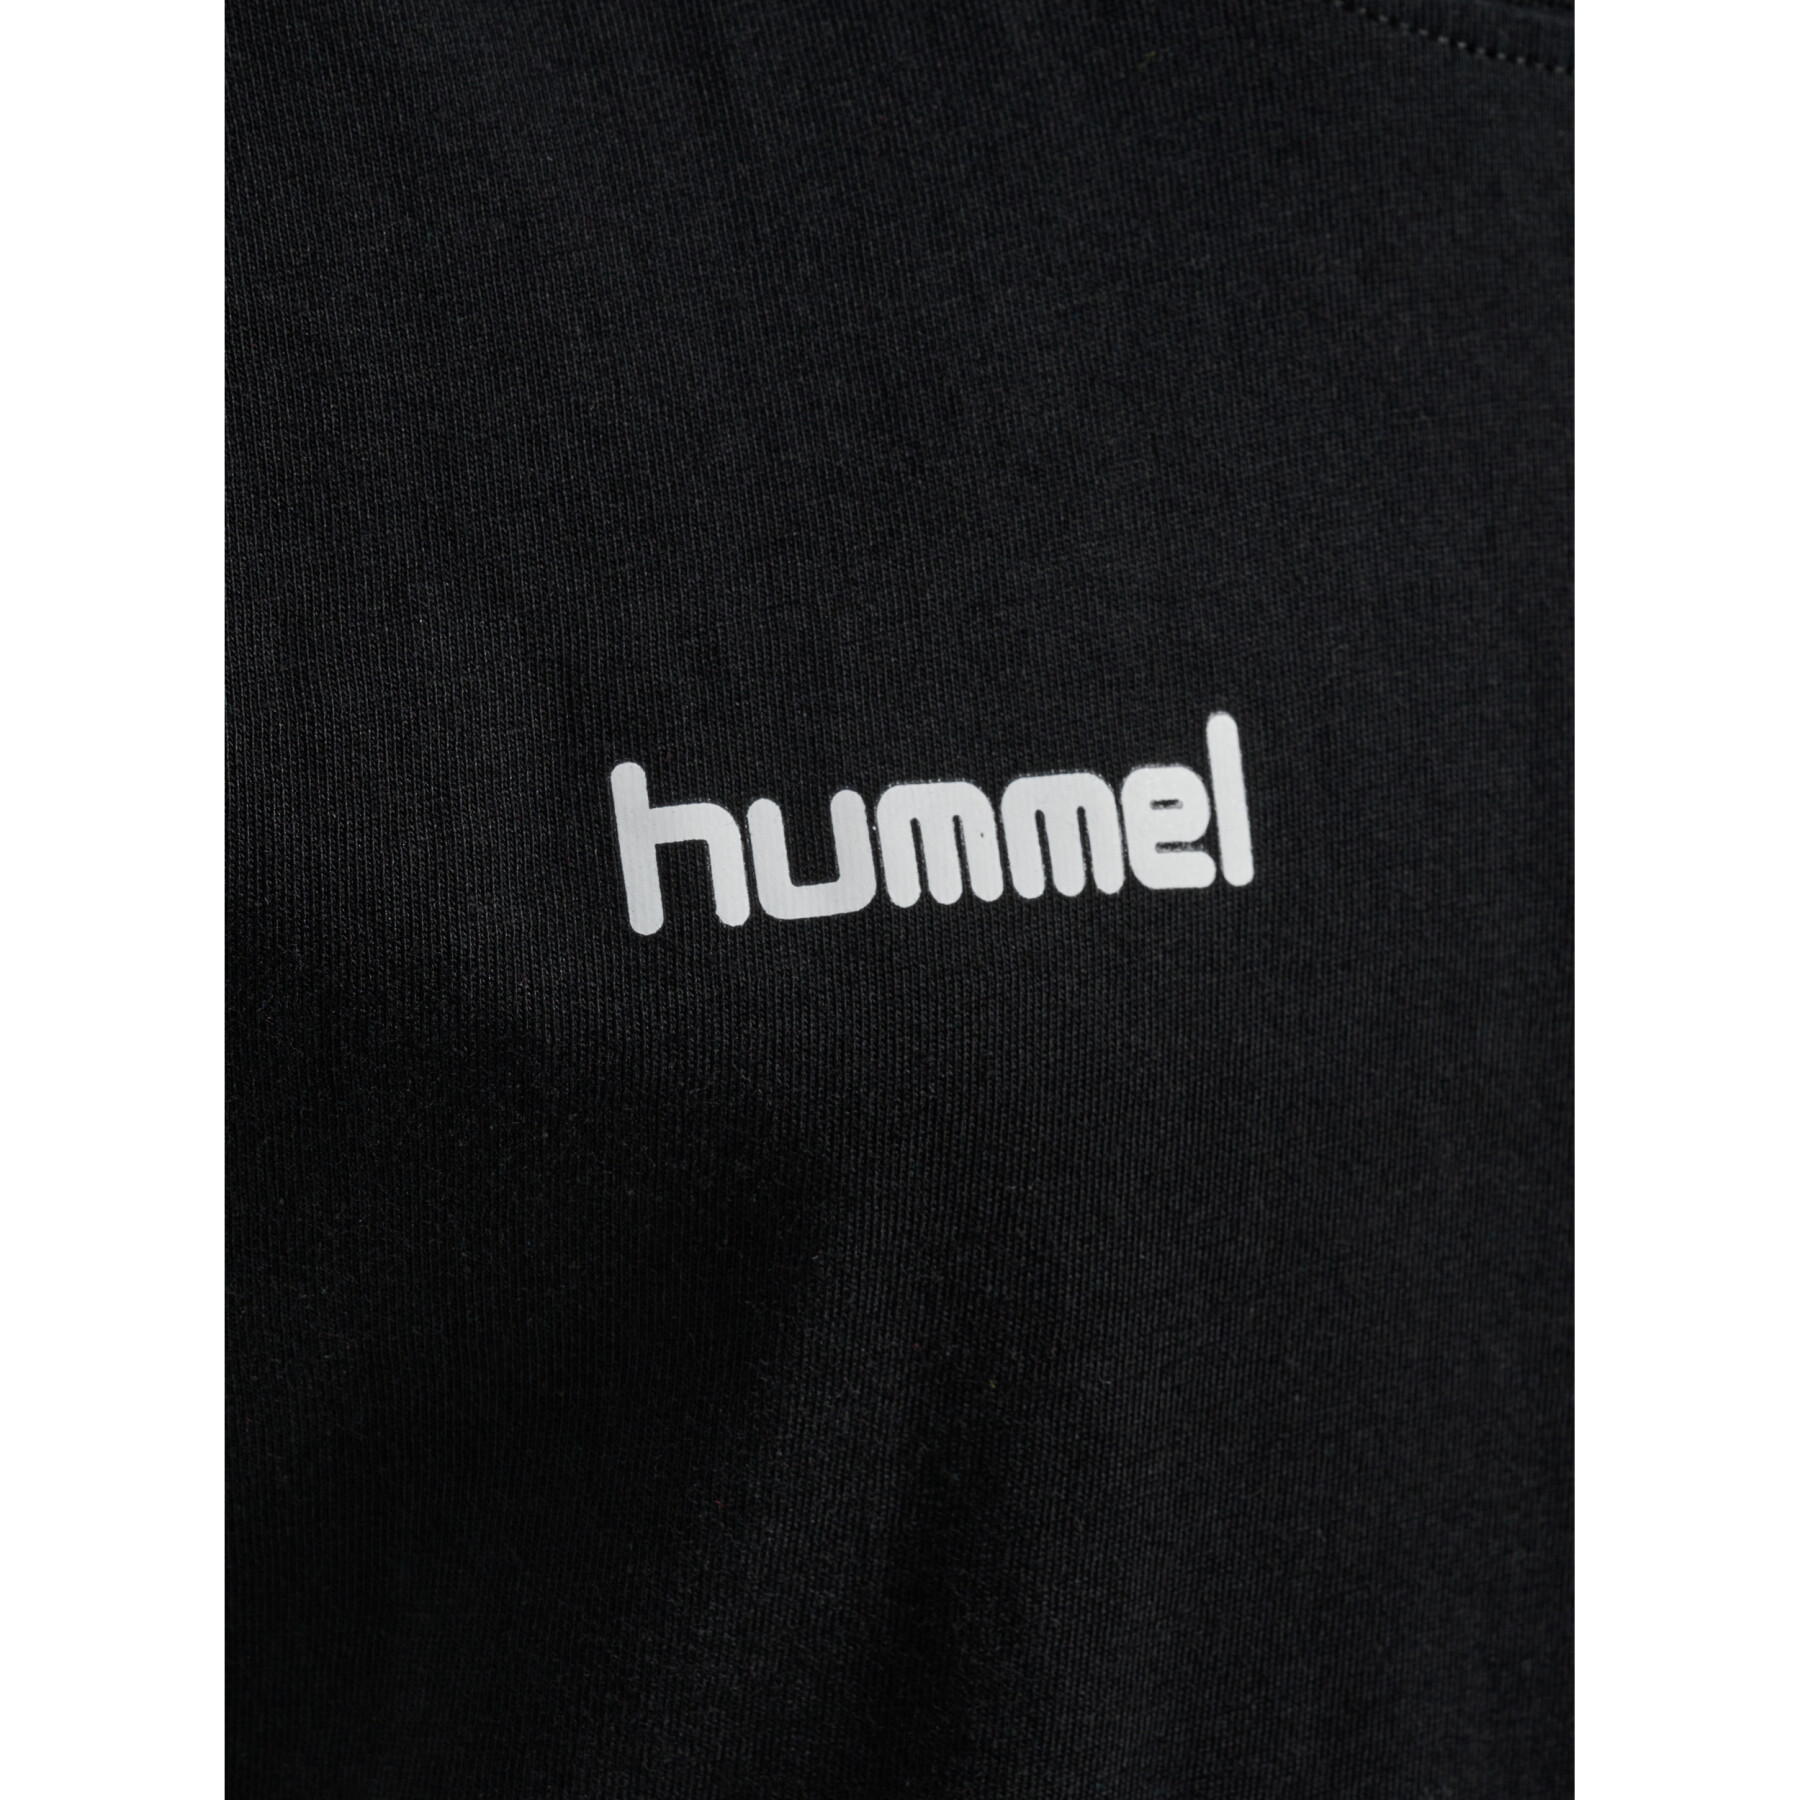 Kid's T-shirt Hummel hmlGO